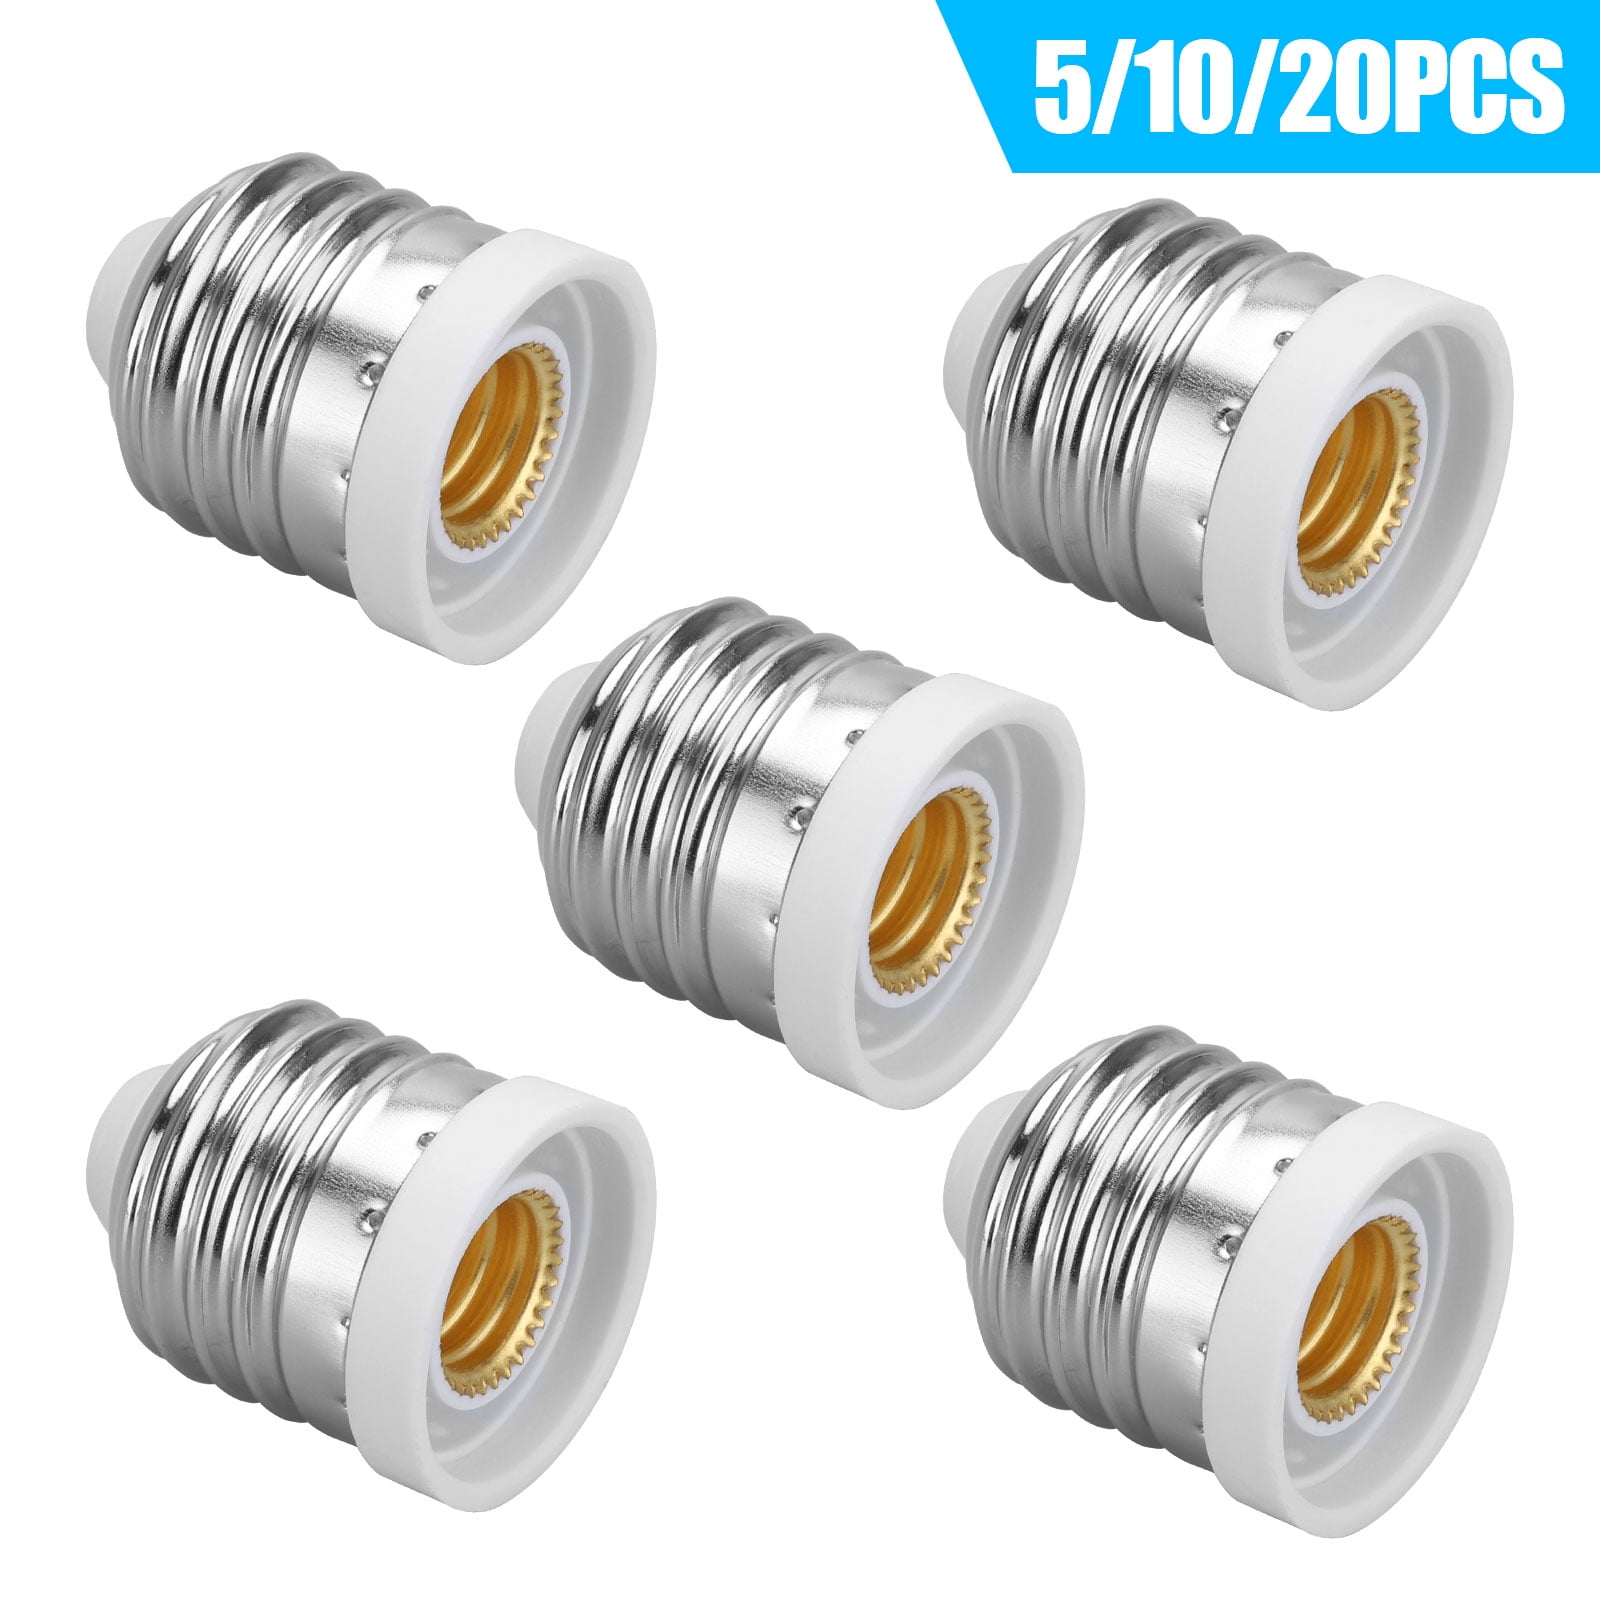 5pc Clip In Lamp Sockets E12 Base 24 In Wire 